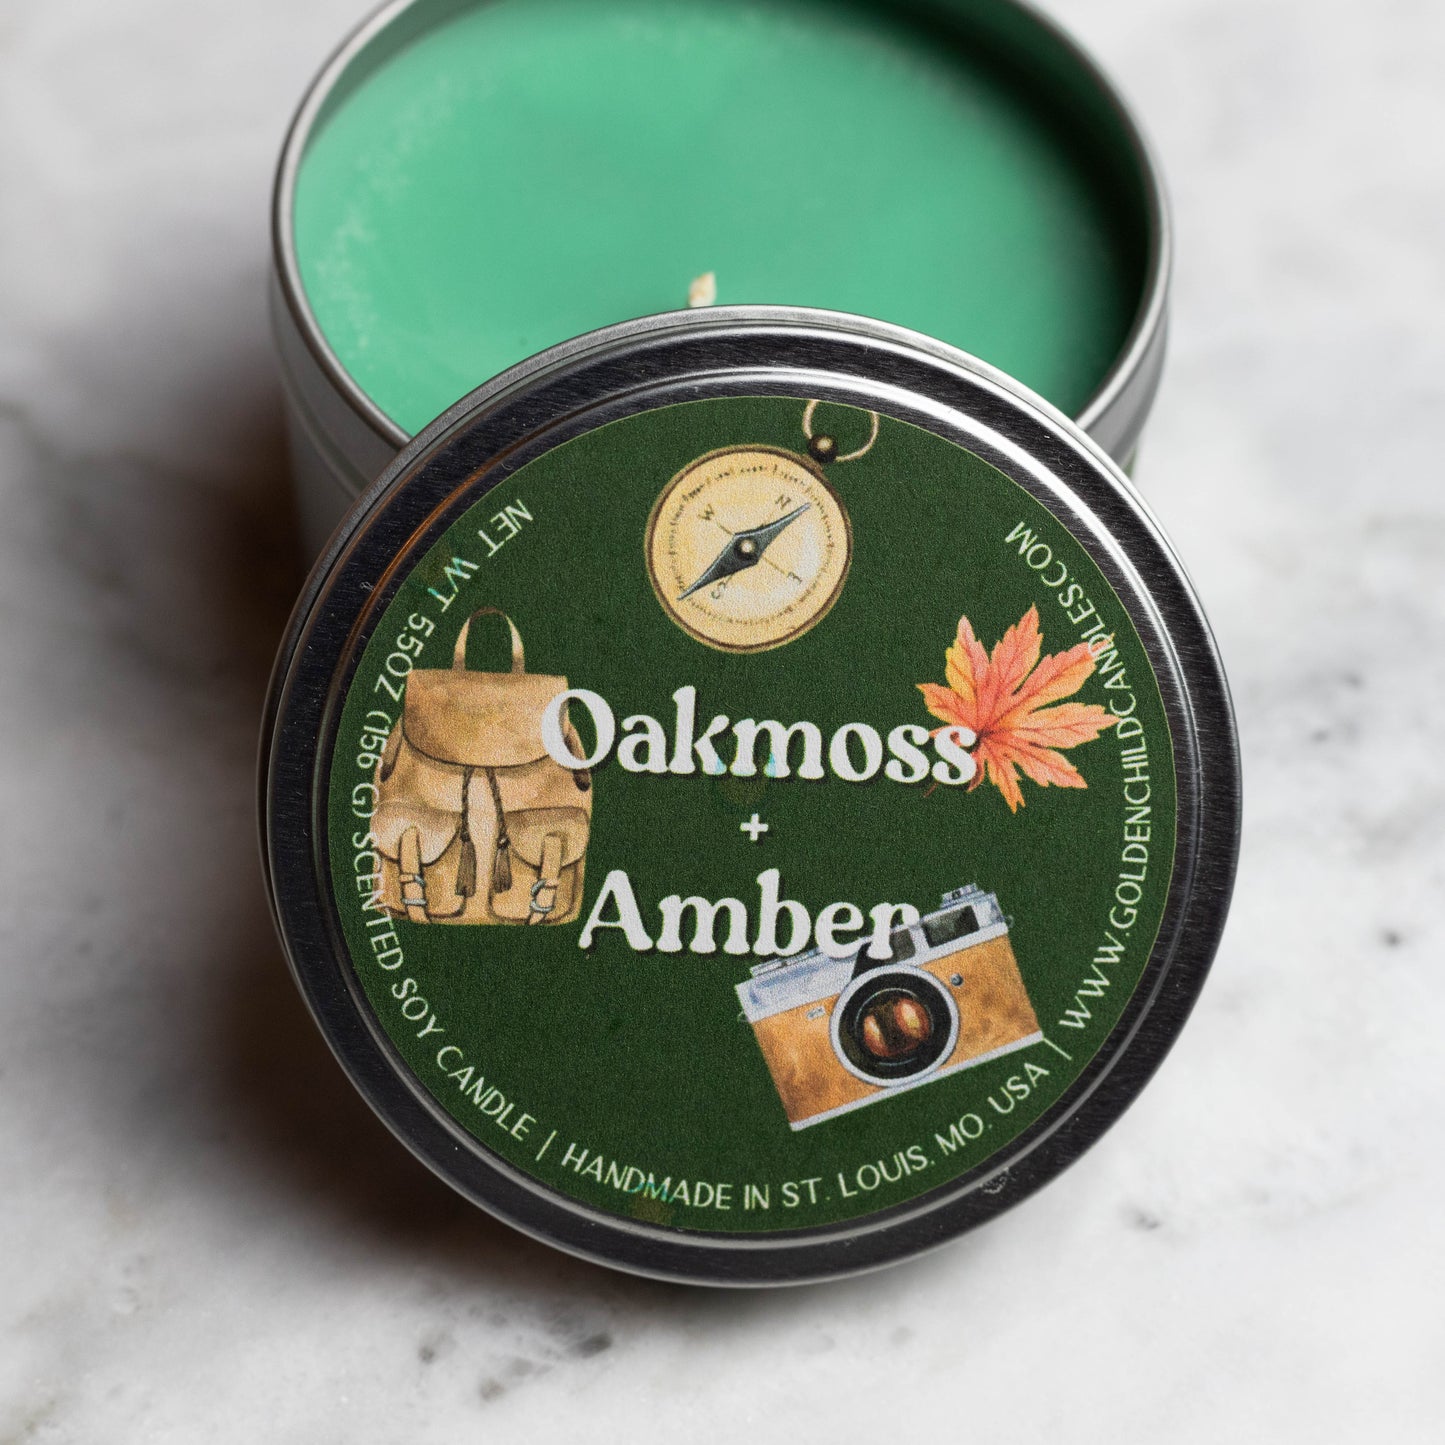 Oakmoss + Amber Candle